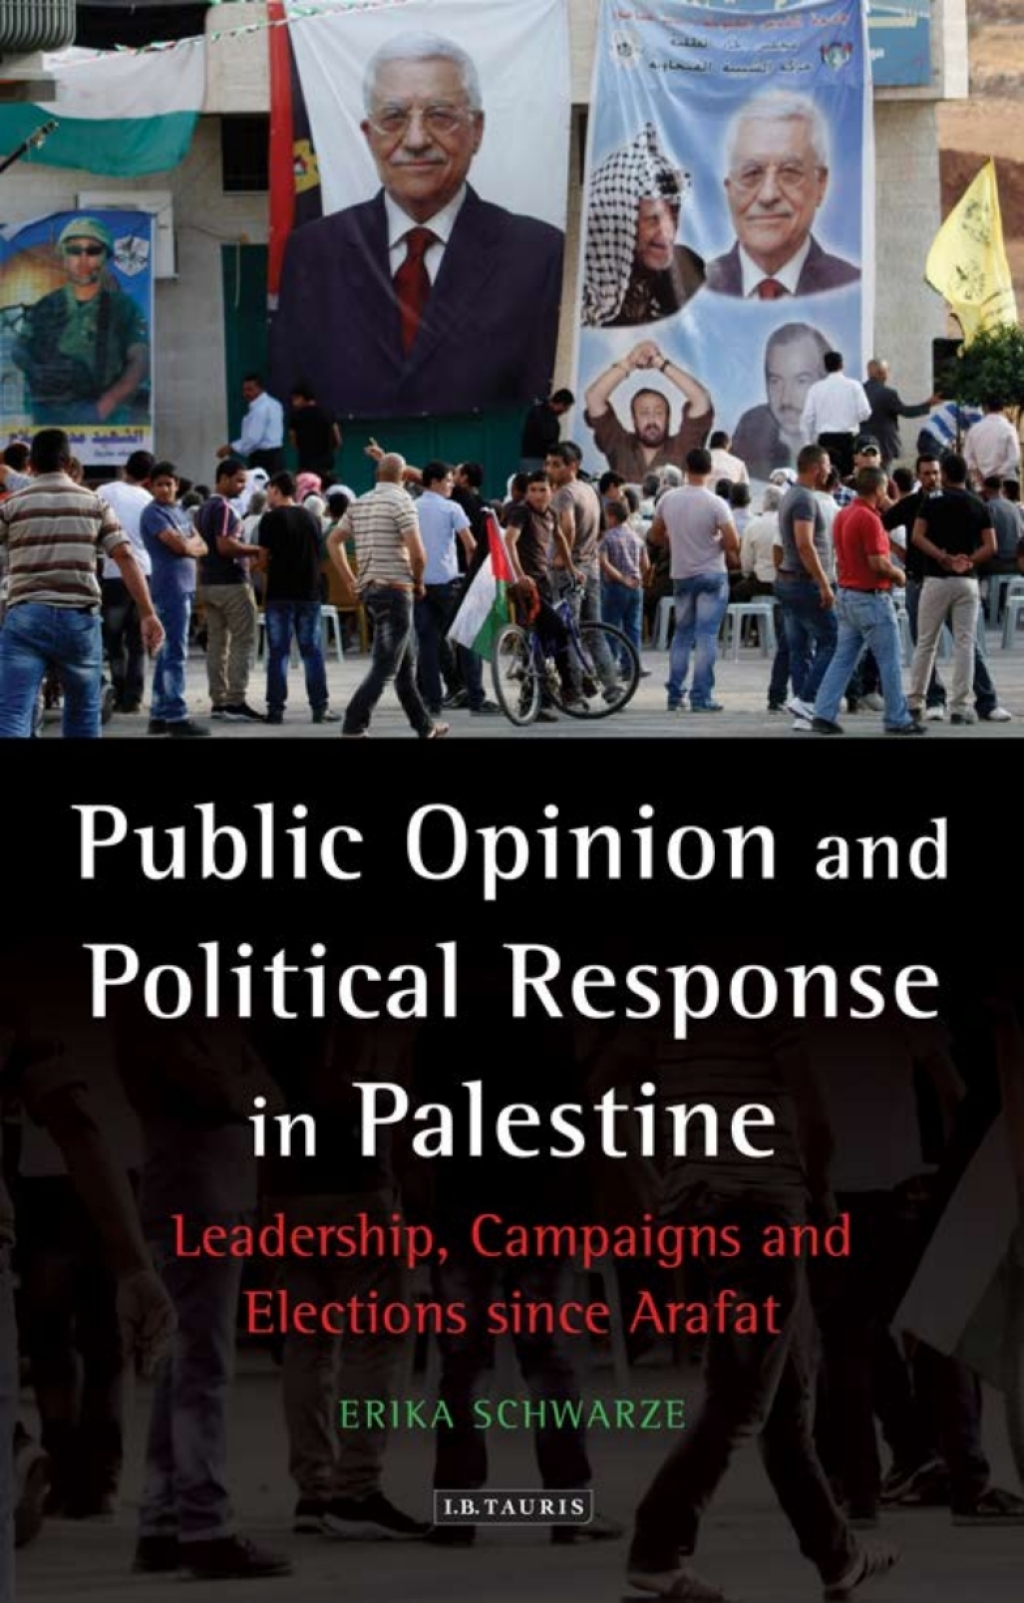 Public Opinion and Political Response in Palestine (eBook) - Erika Schwarze